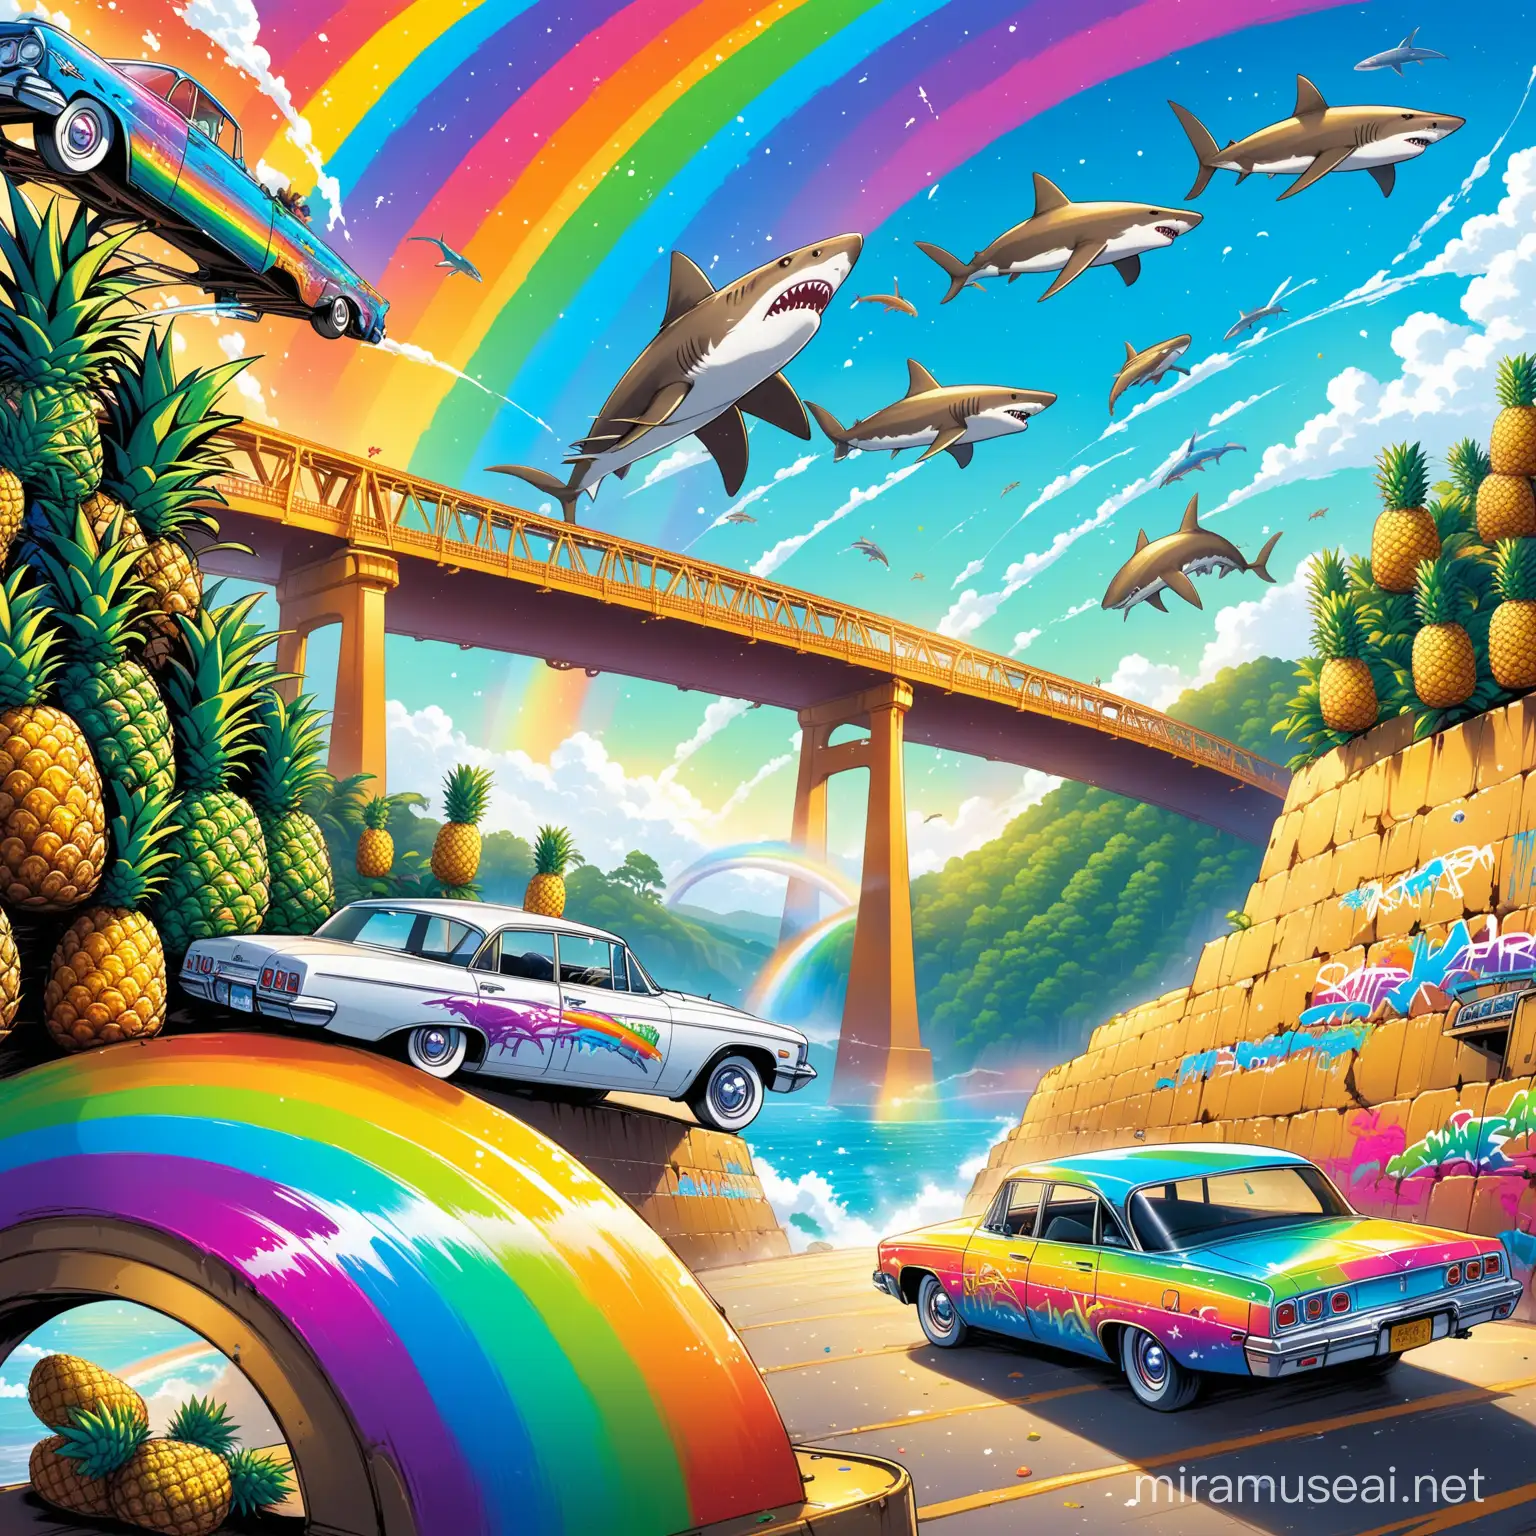 golden bridge, flying sharks, rainbow, stars, impala car,graffiti, skateboarder, pineapples, 